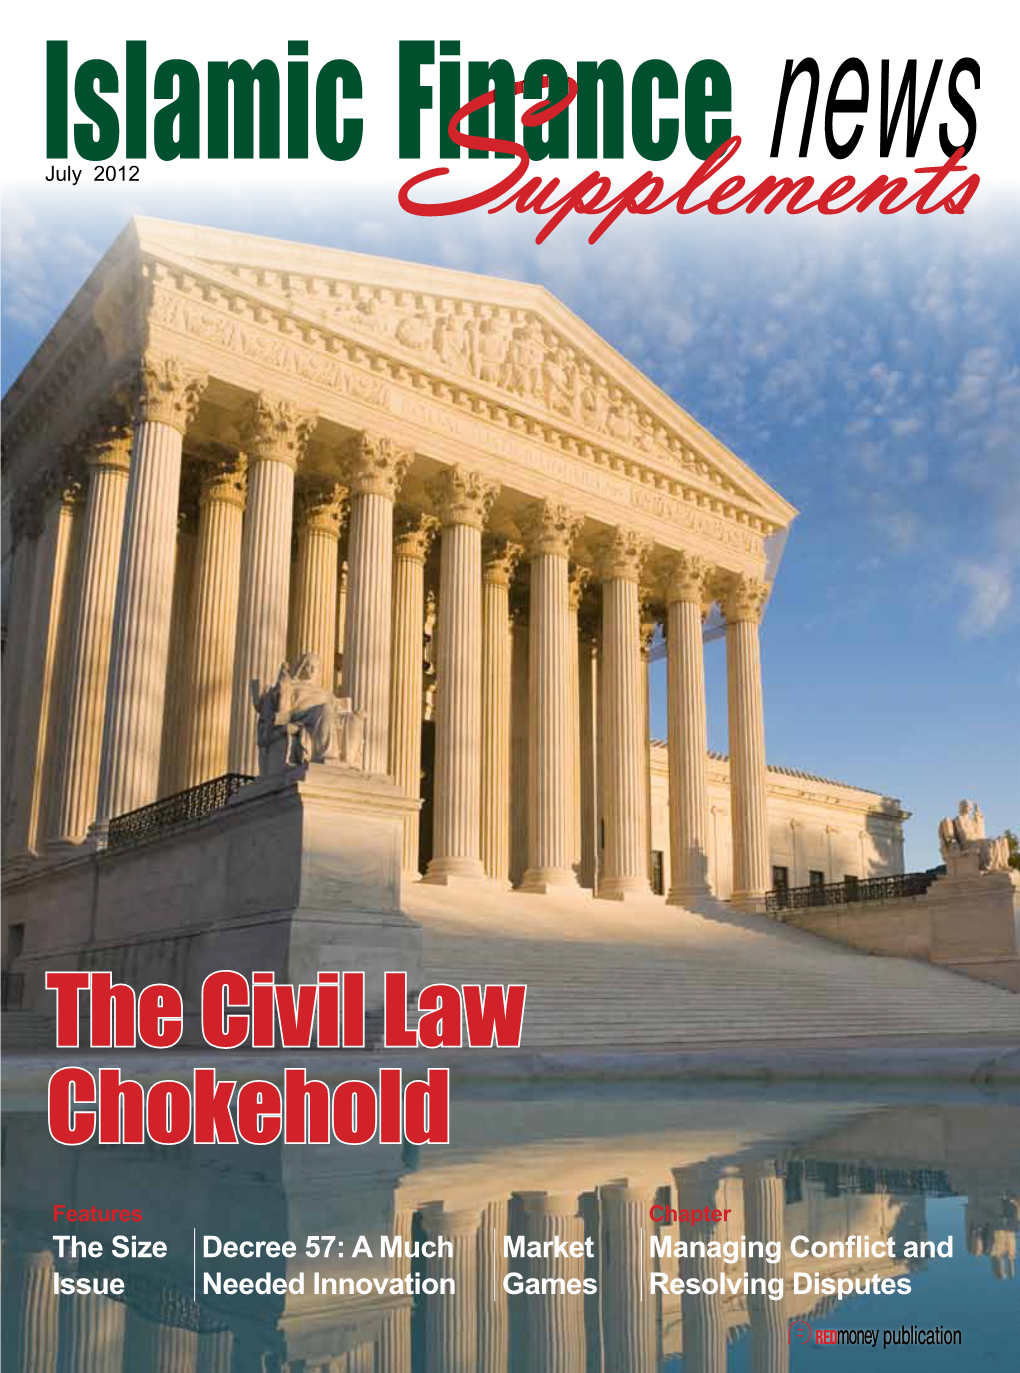 The Civil Law Chokehold